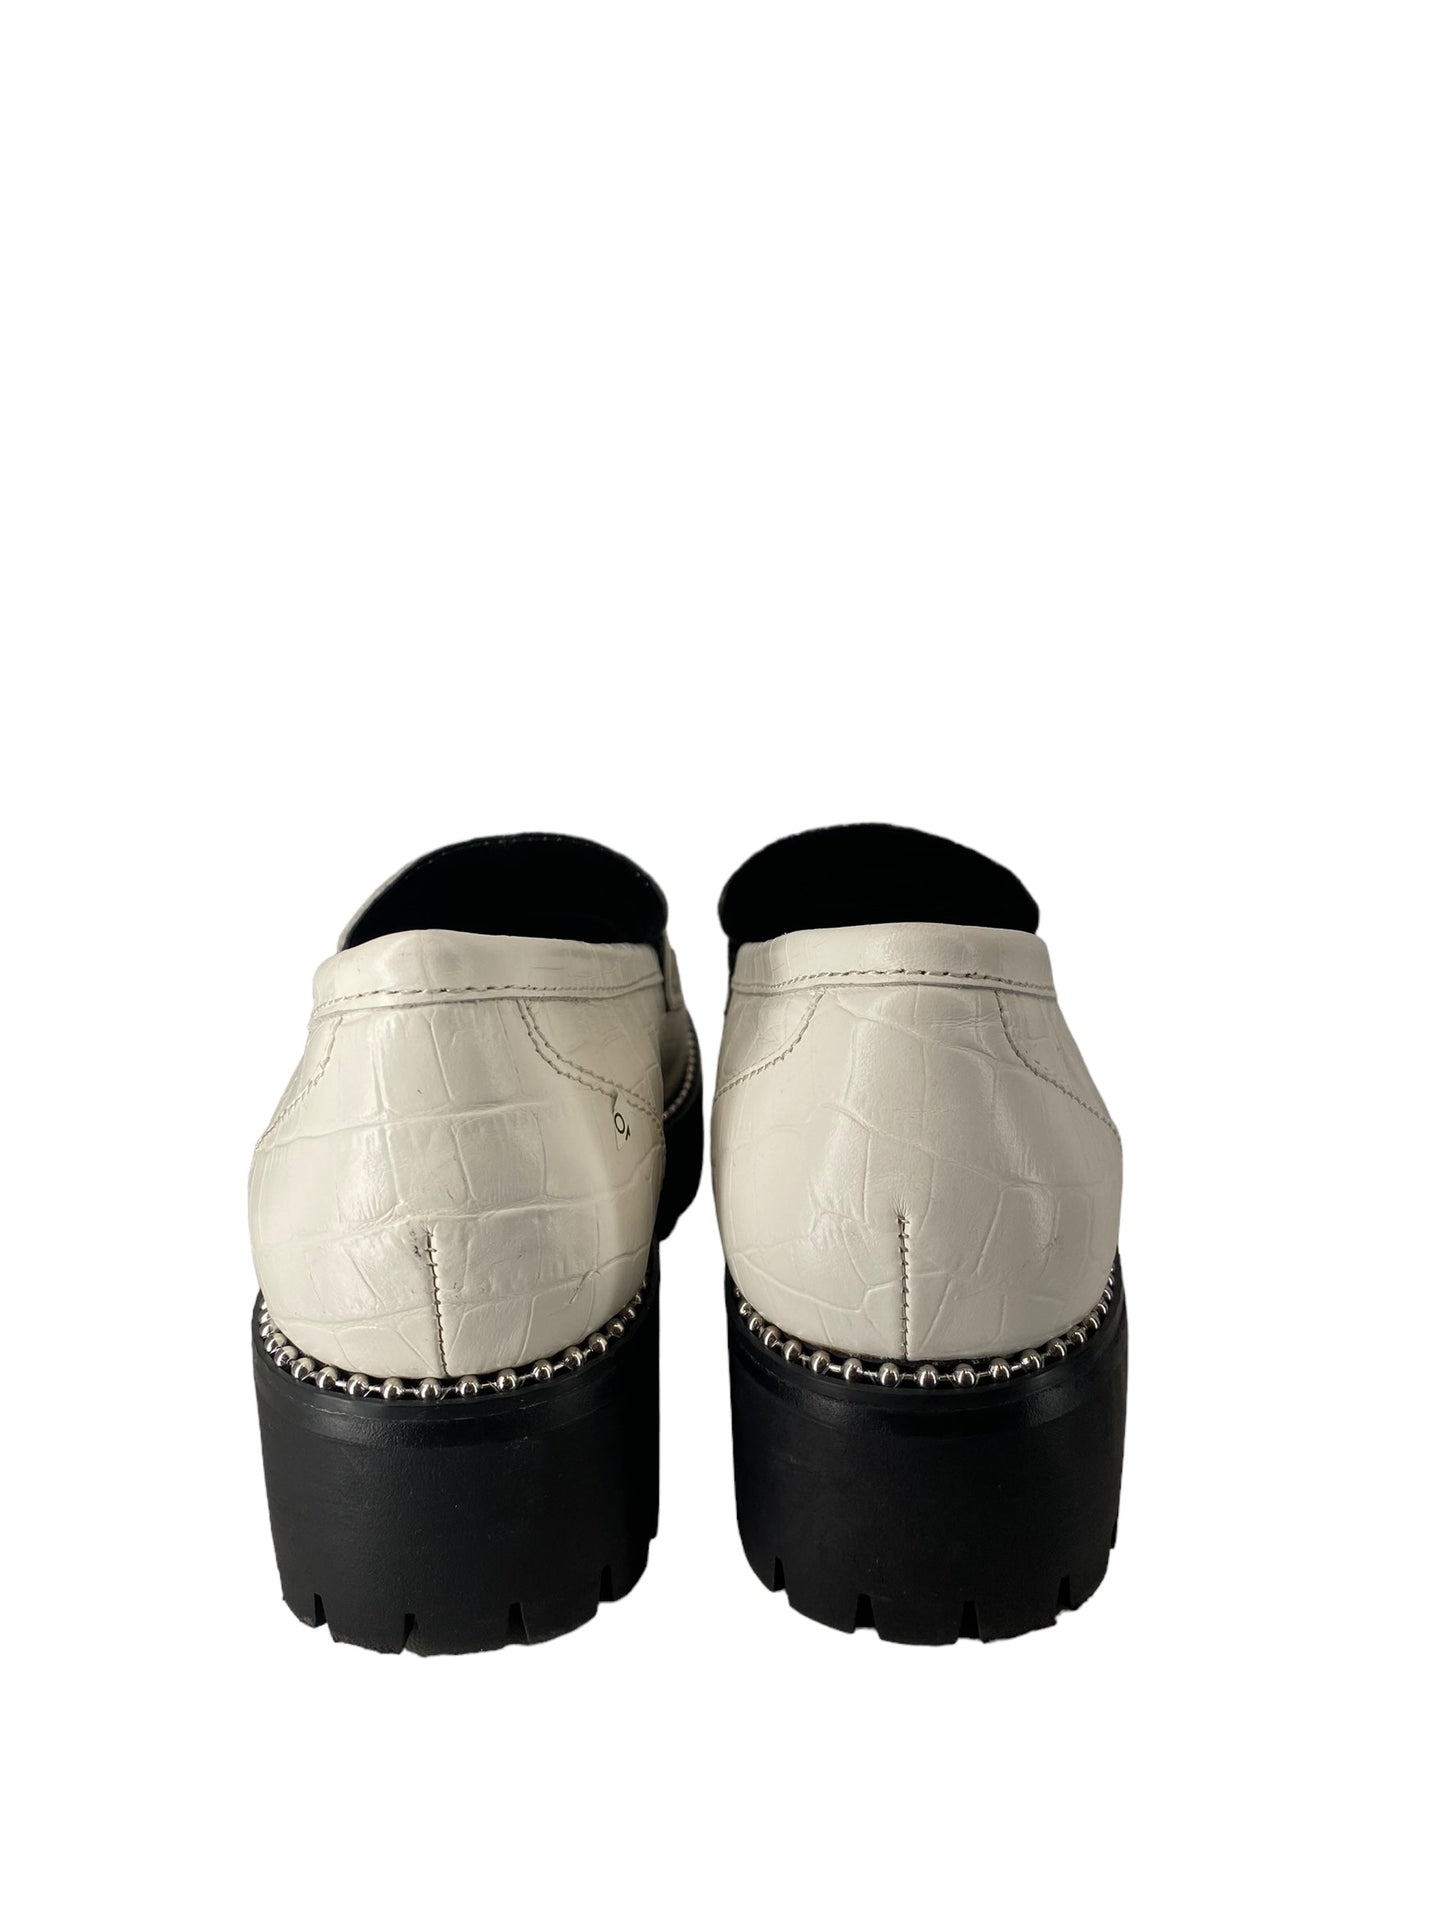 White Shoes Heels Block Aqua, Size 10